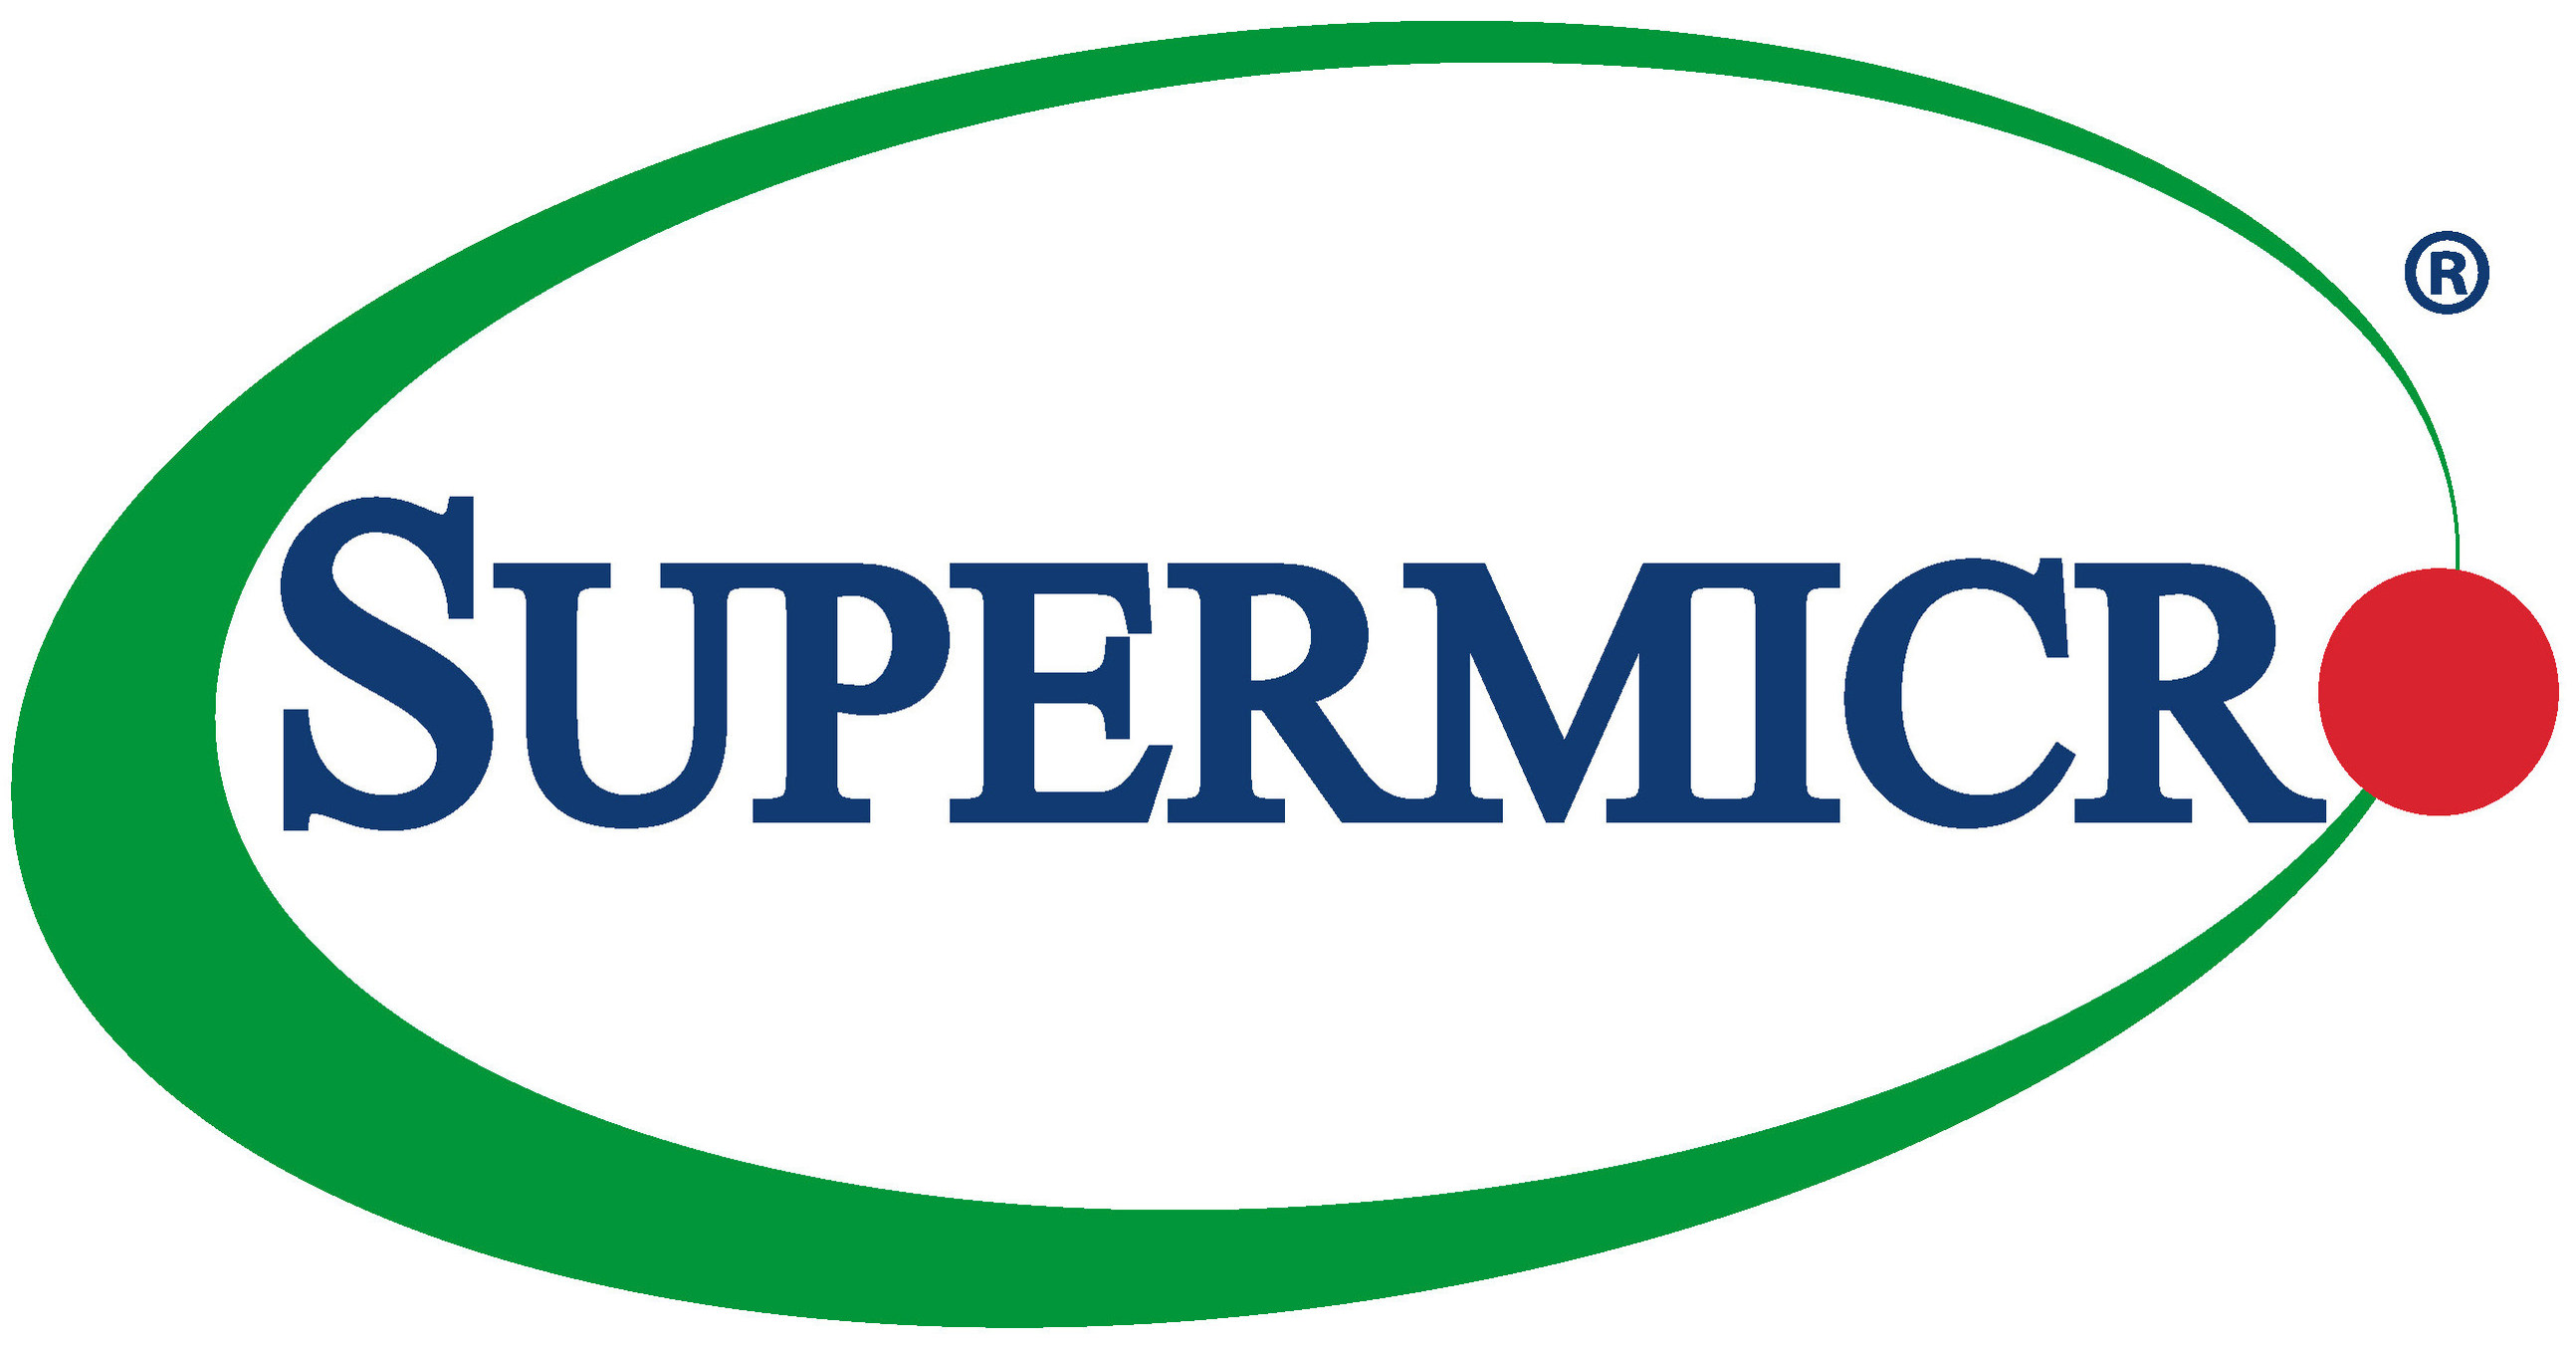 Media Alert: Supermicro's 3rd Annual Open Storage Summit